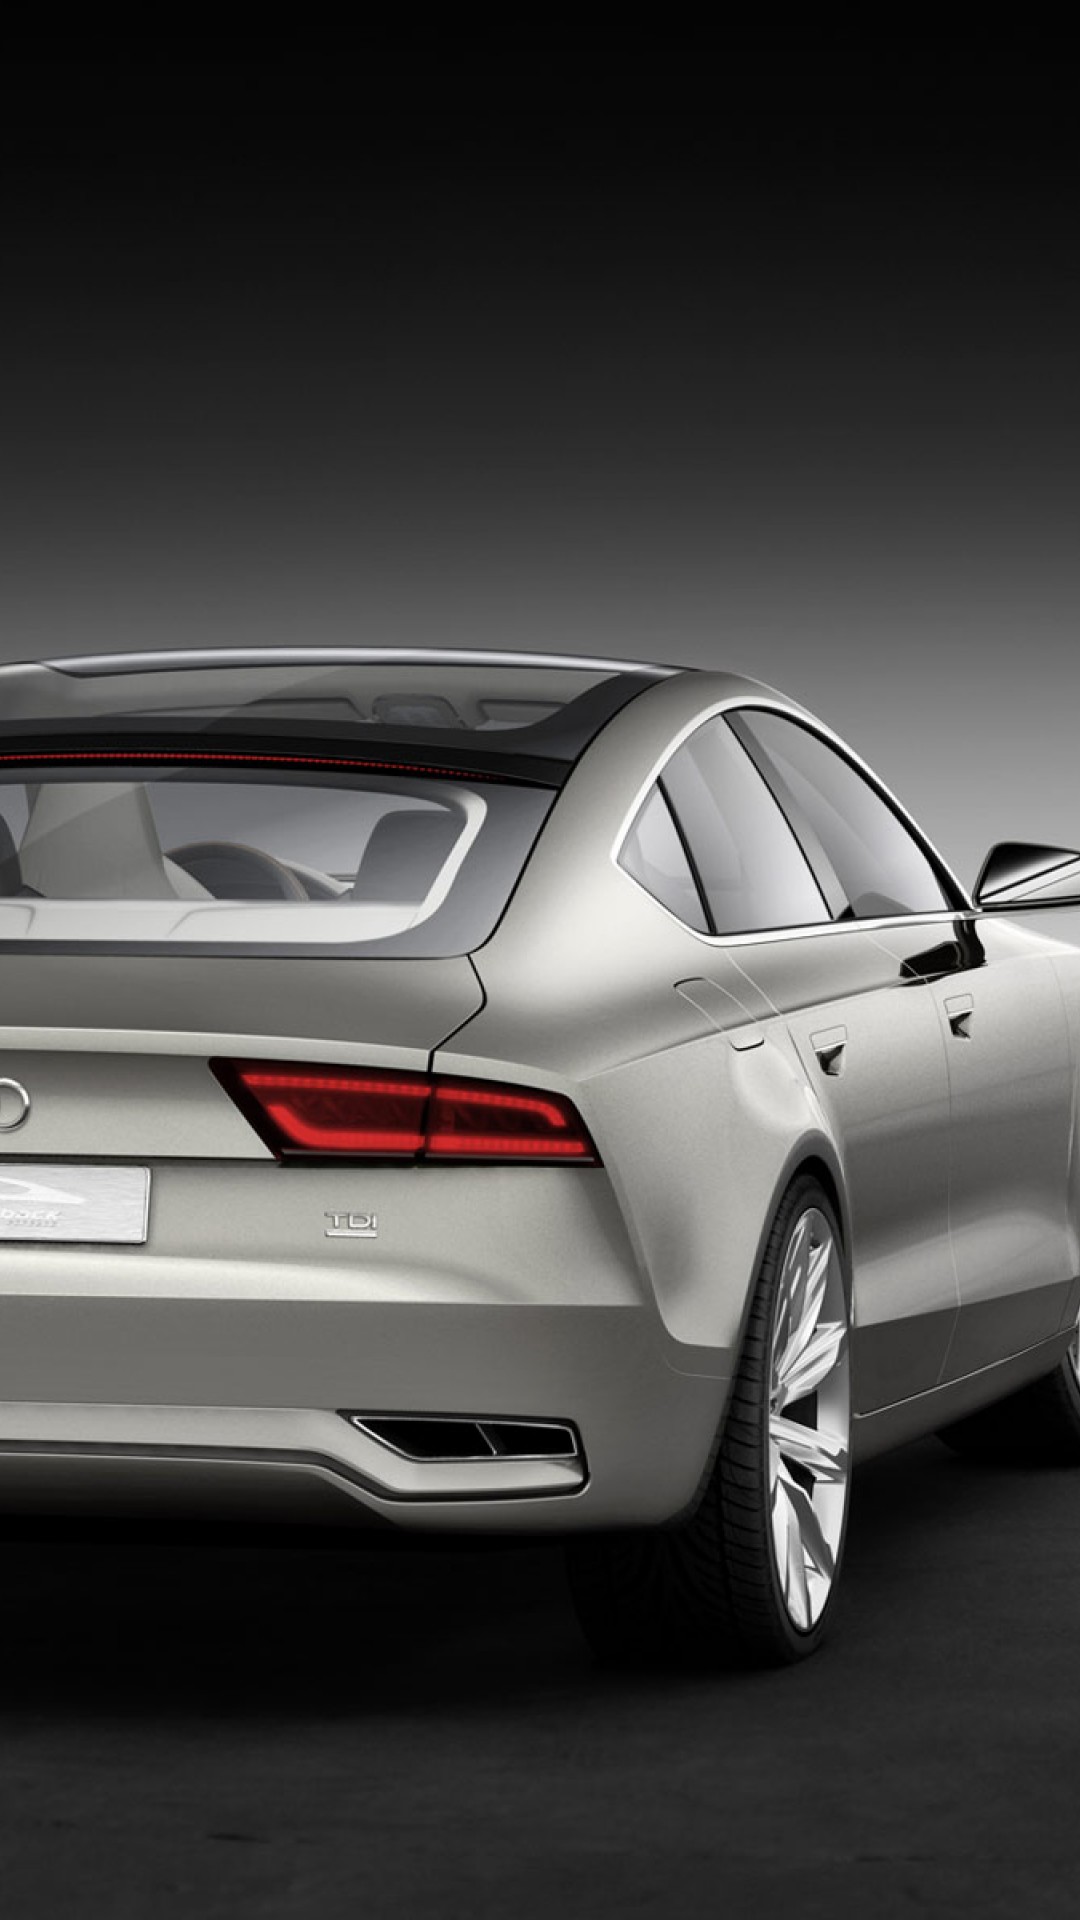 Audi_sportback-concept_732_1600x1200.jpg